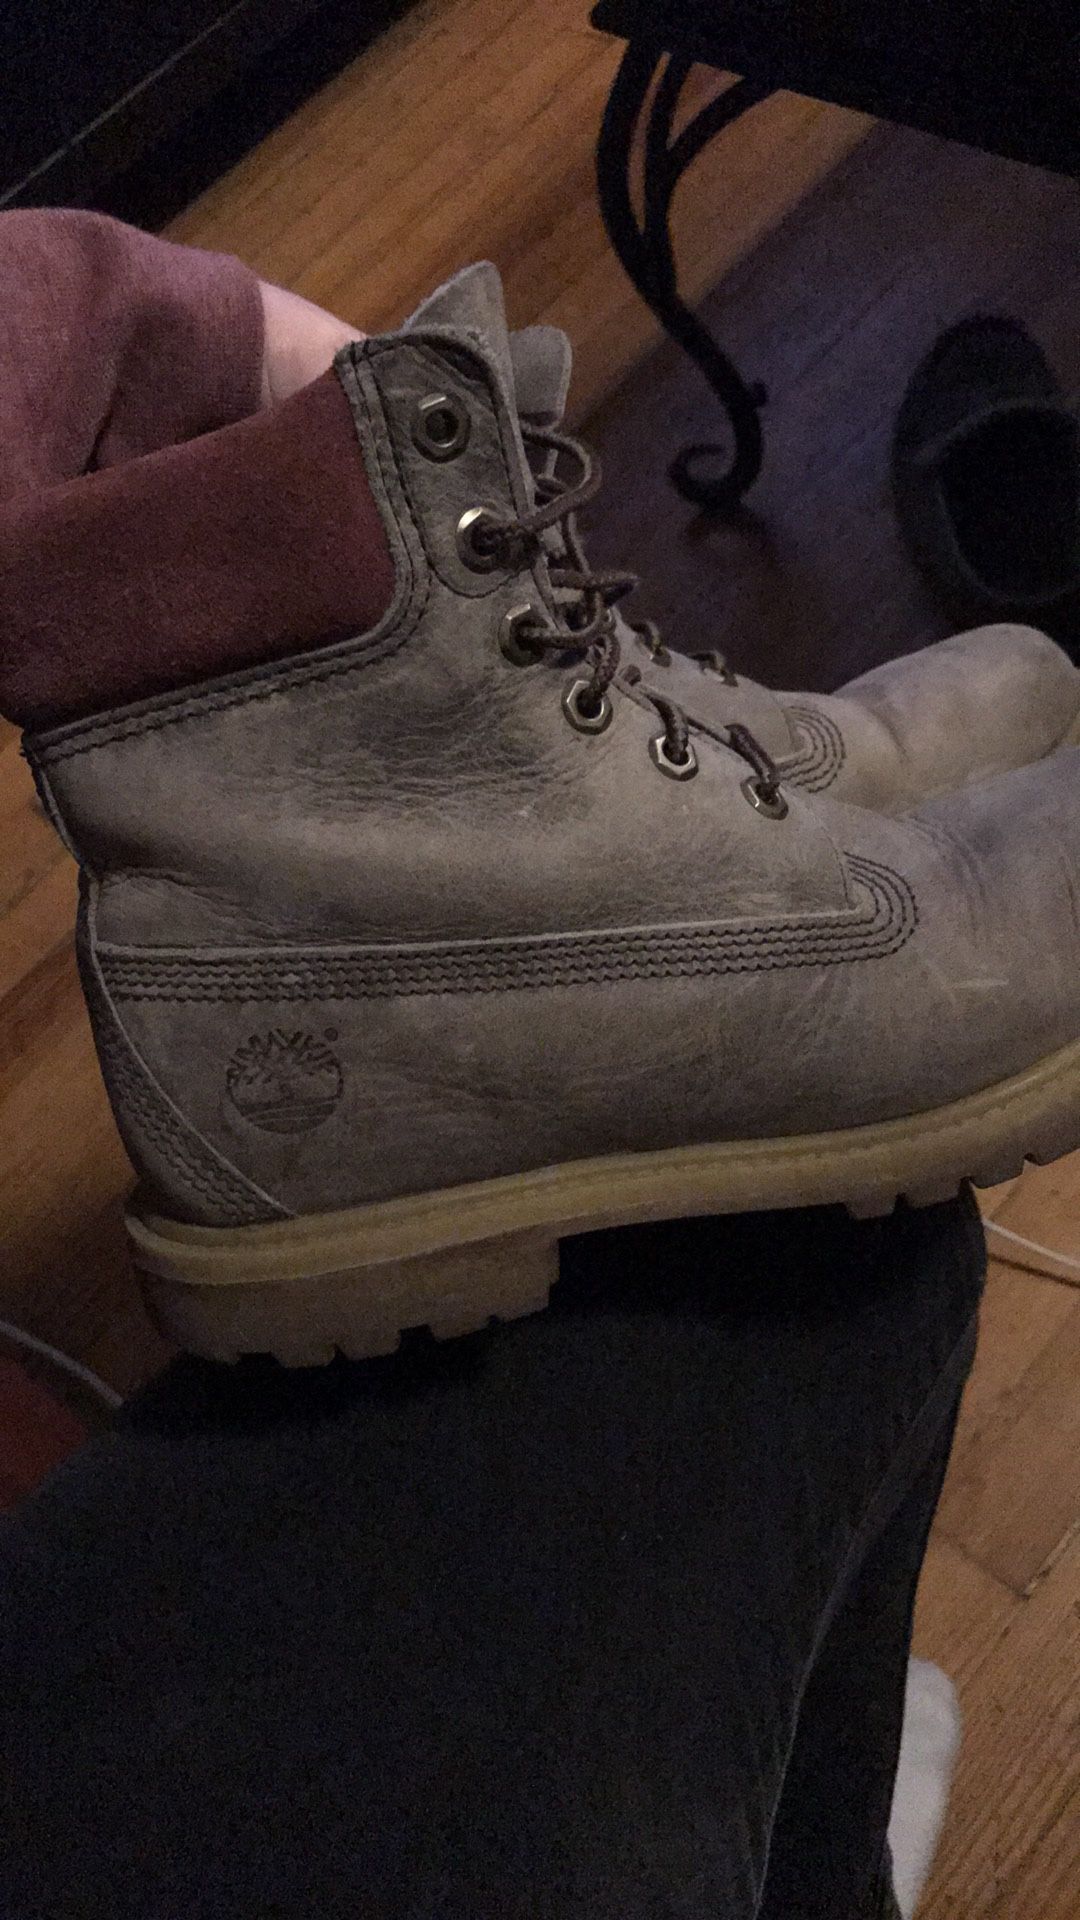 Size 8 women’s timberland boots